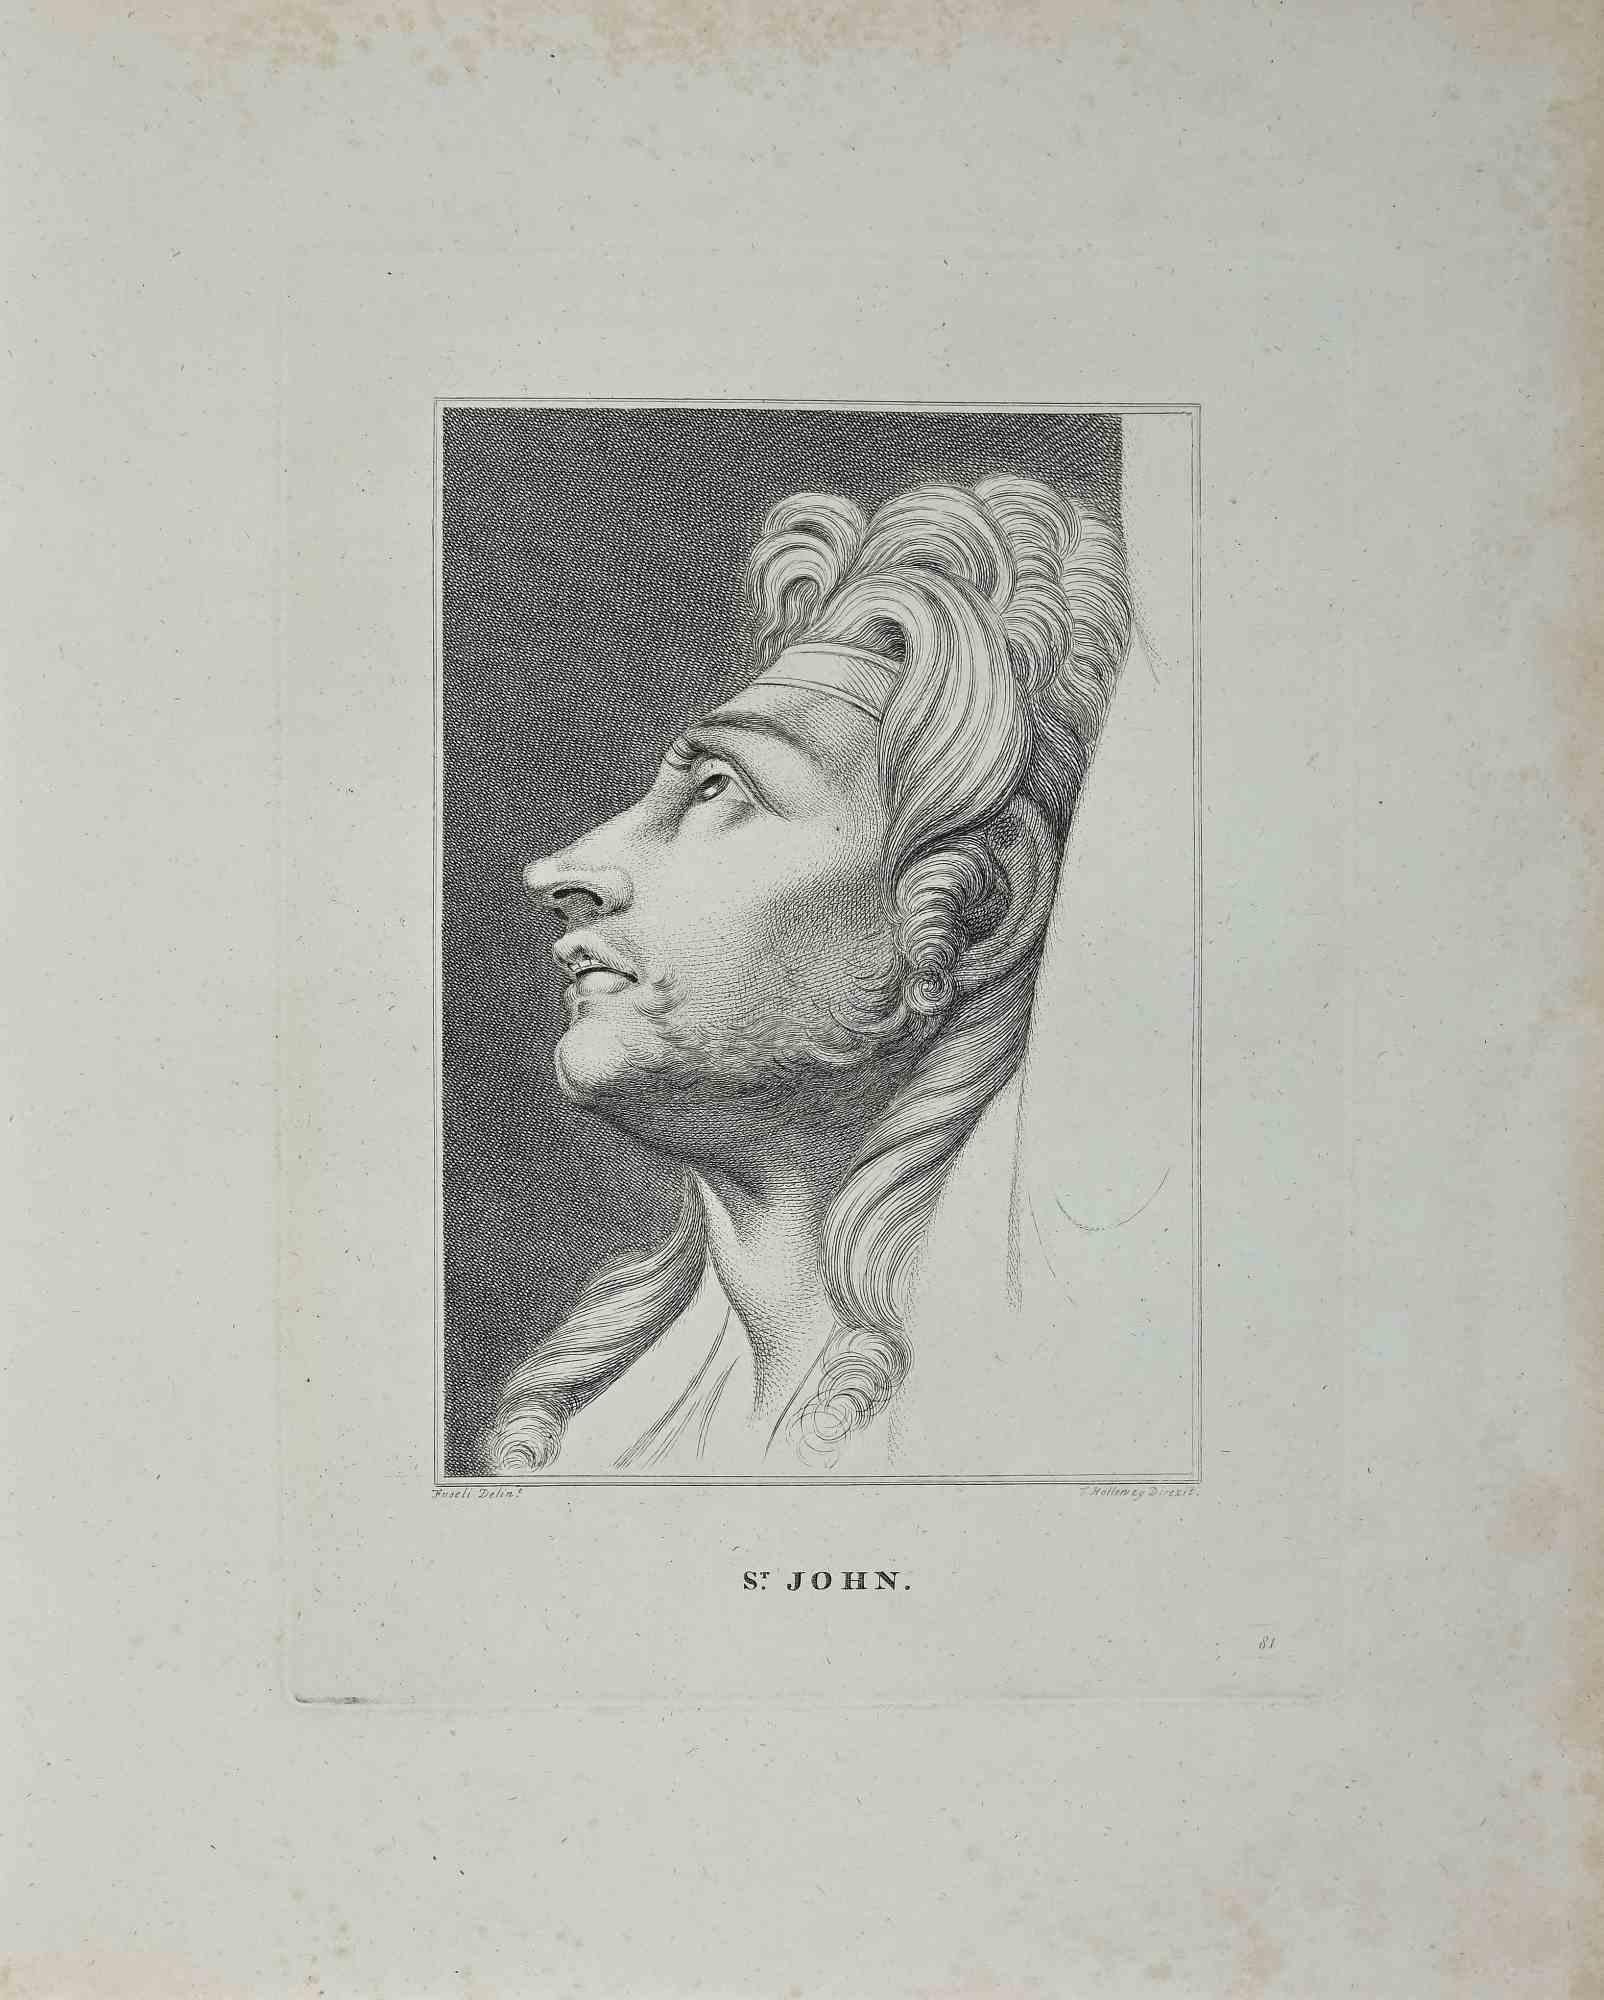 Portrait de S. John - Gravure originale de Heinrich Fuseli - 1810